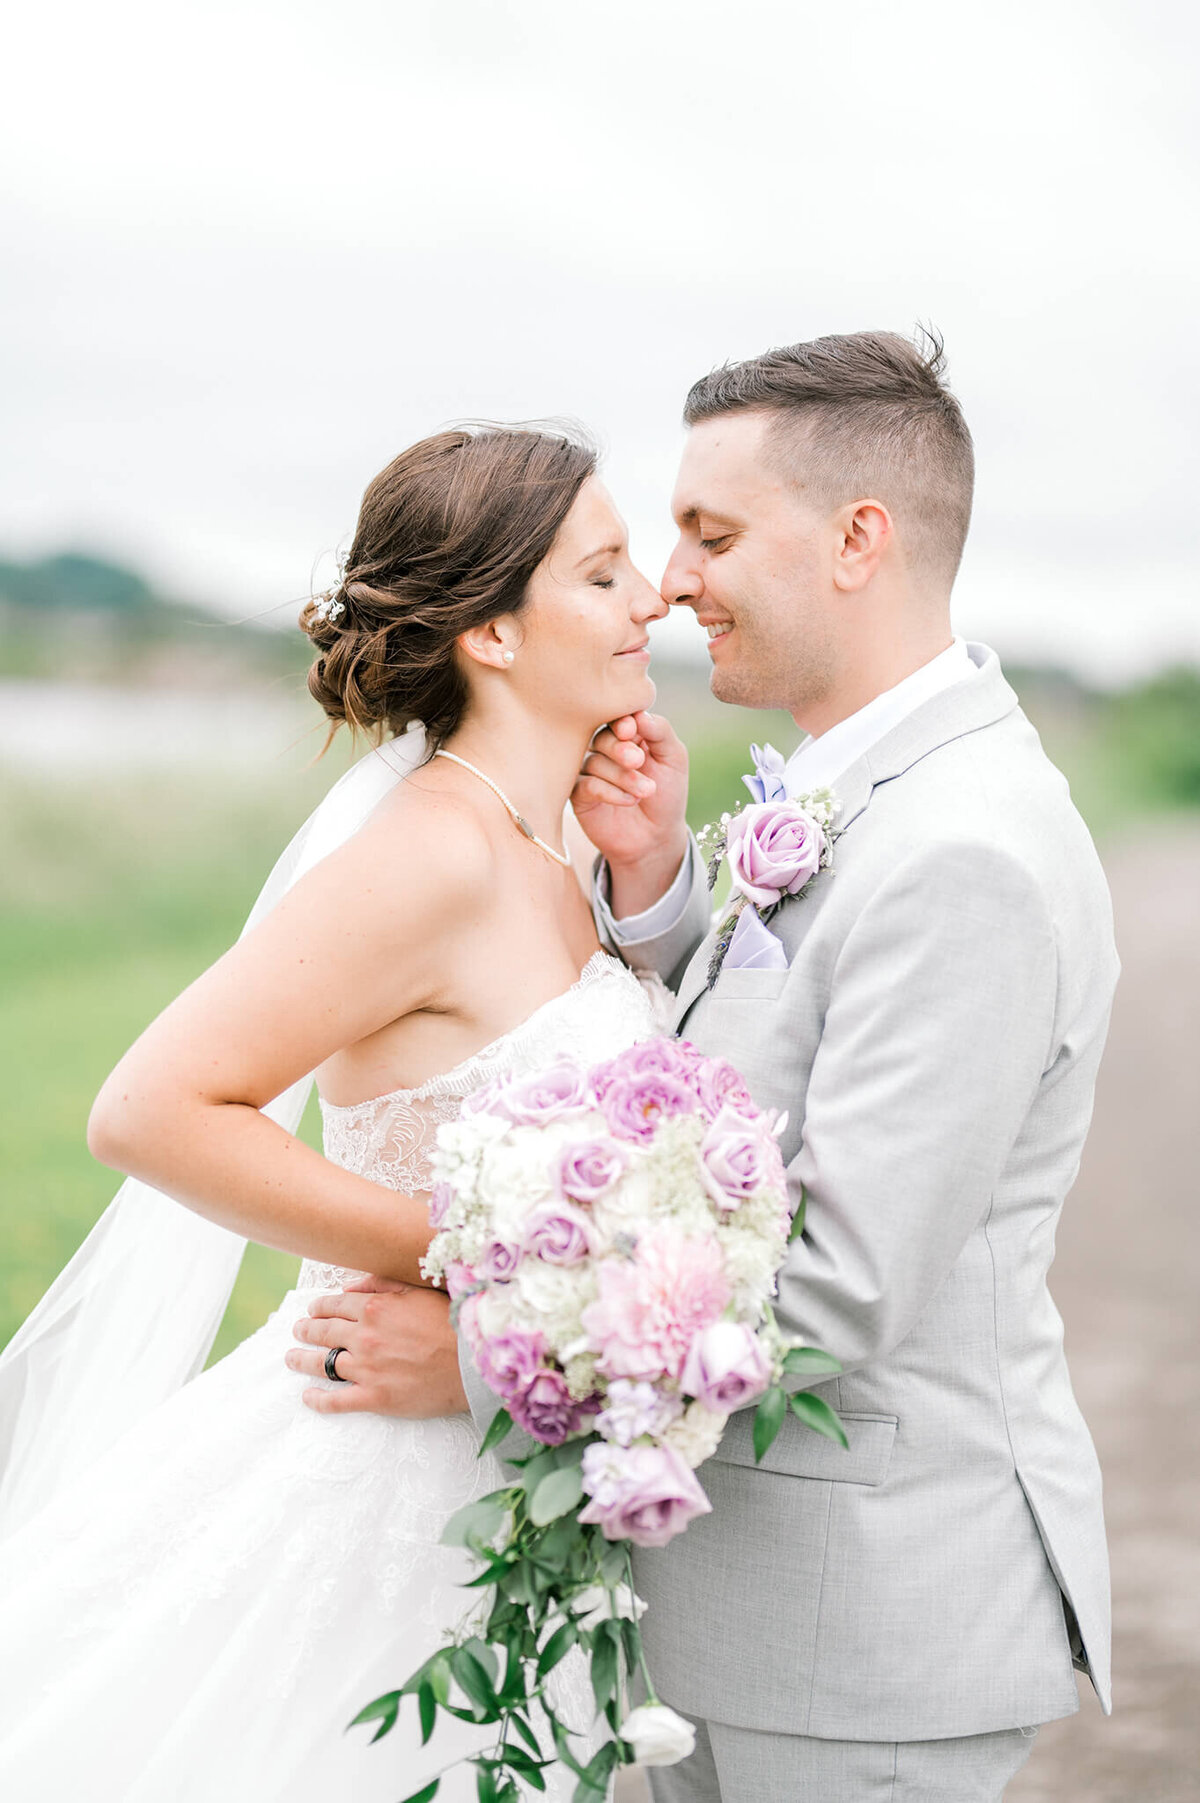 Bride and groom enjoy eskimo kiss and sweet smiles on wedding day